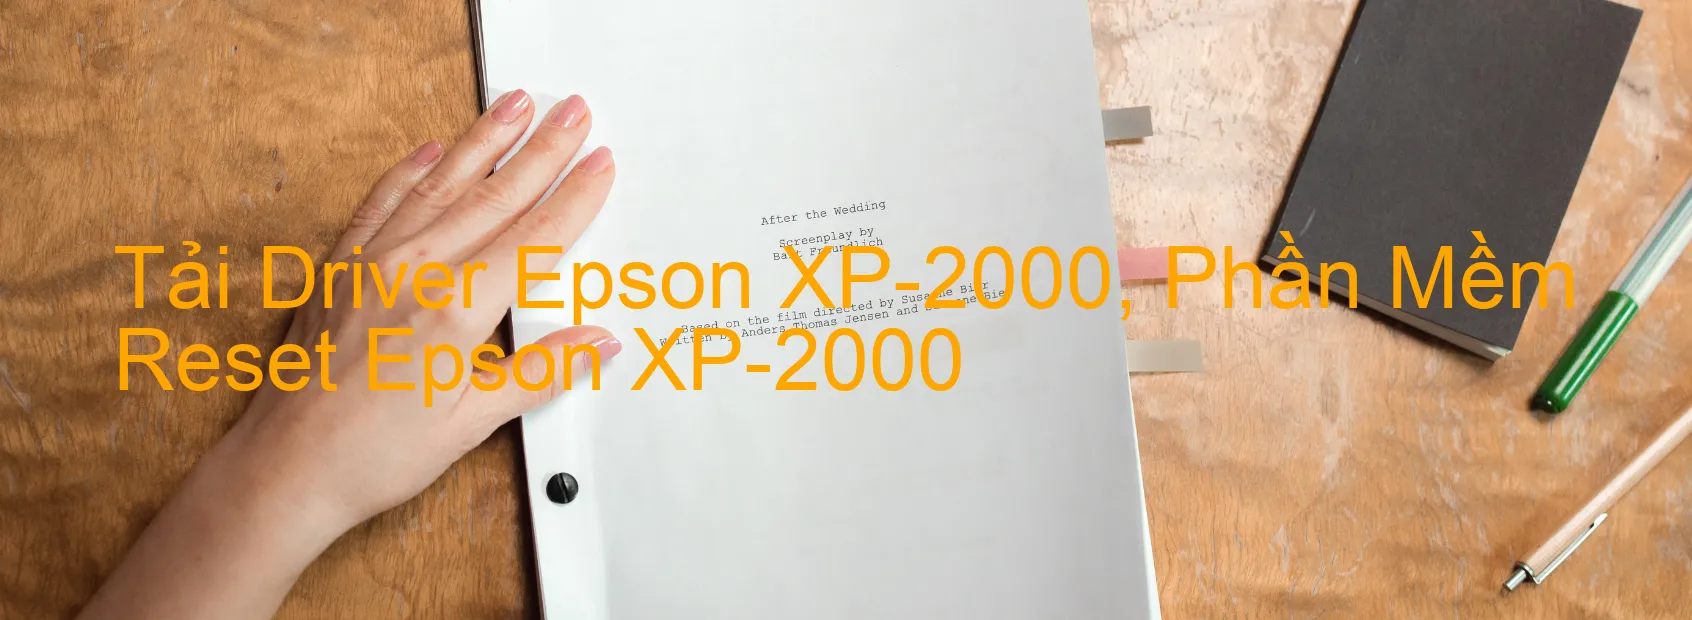 Driver Epson XP-2000, Phần Mềm Reset Epson XP-2000